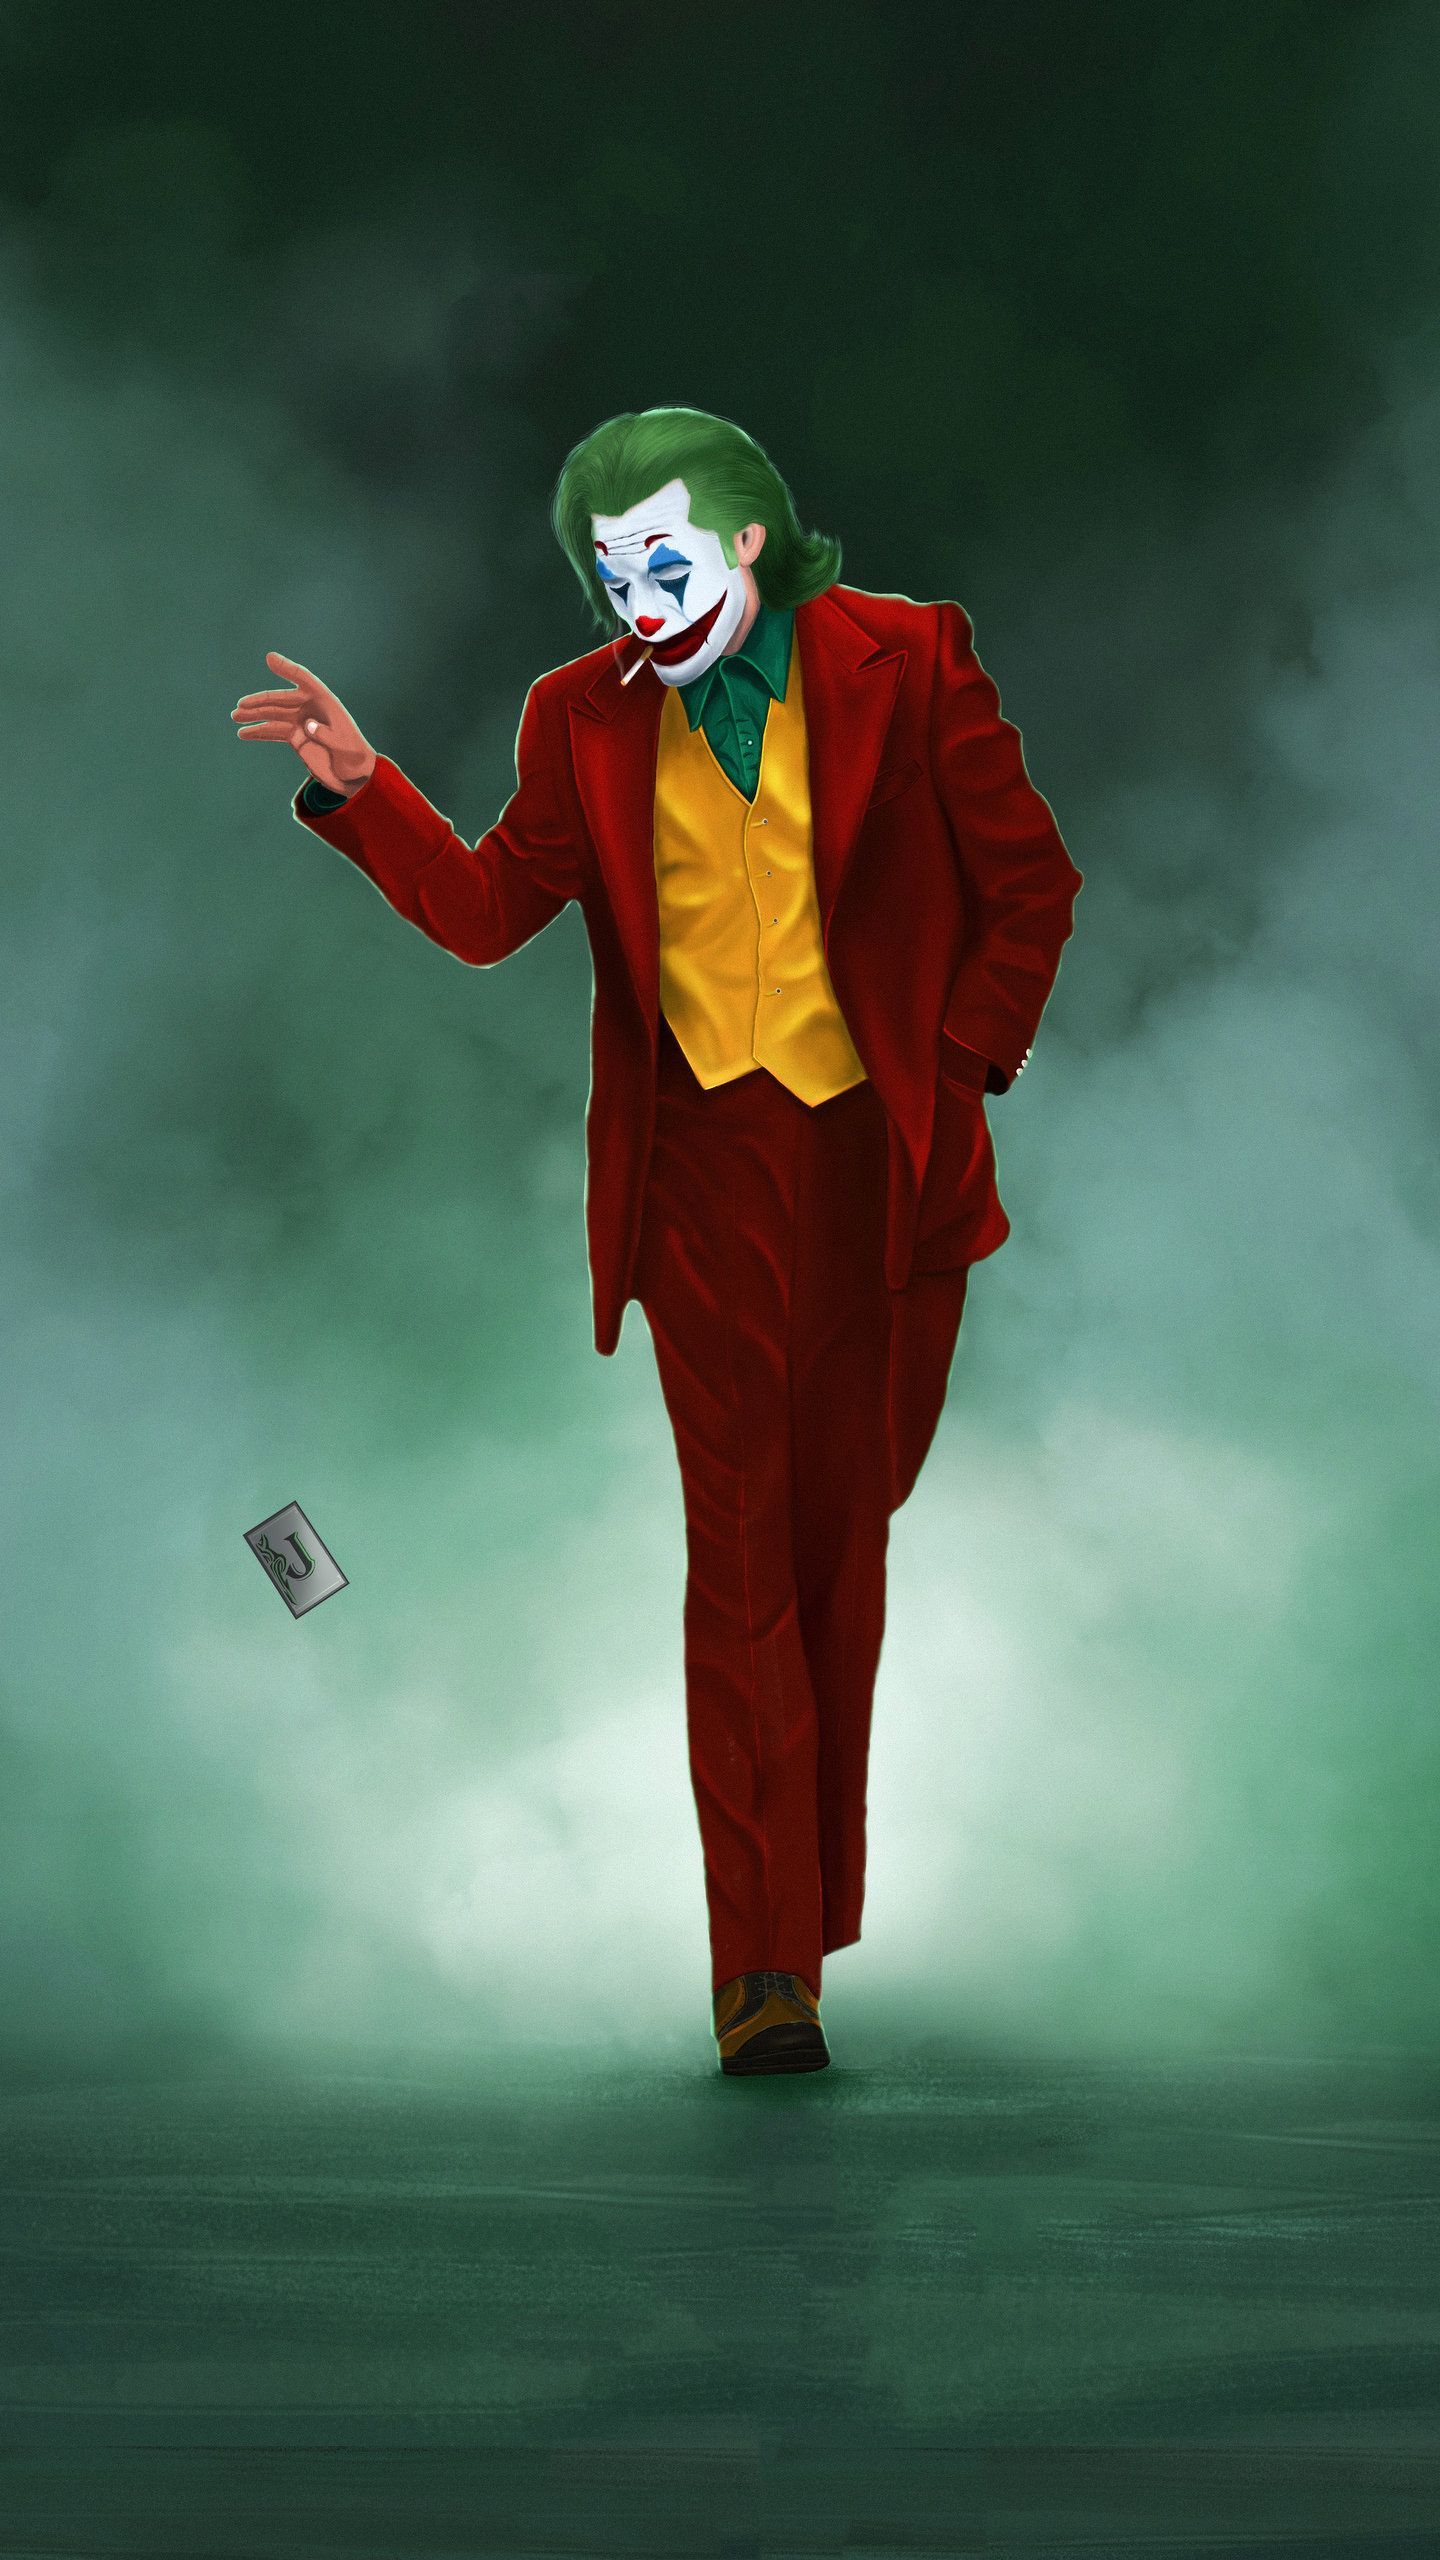 Joker free